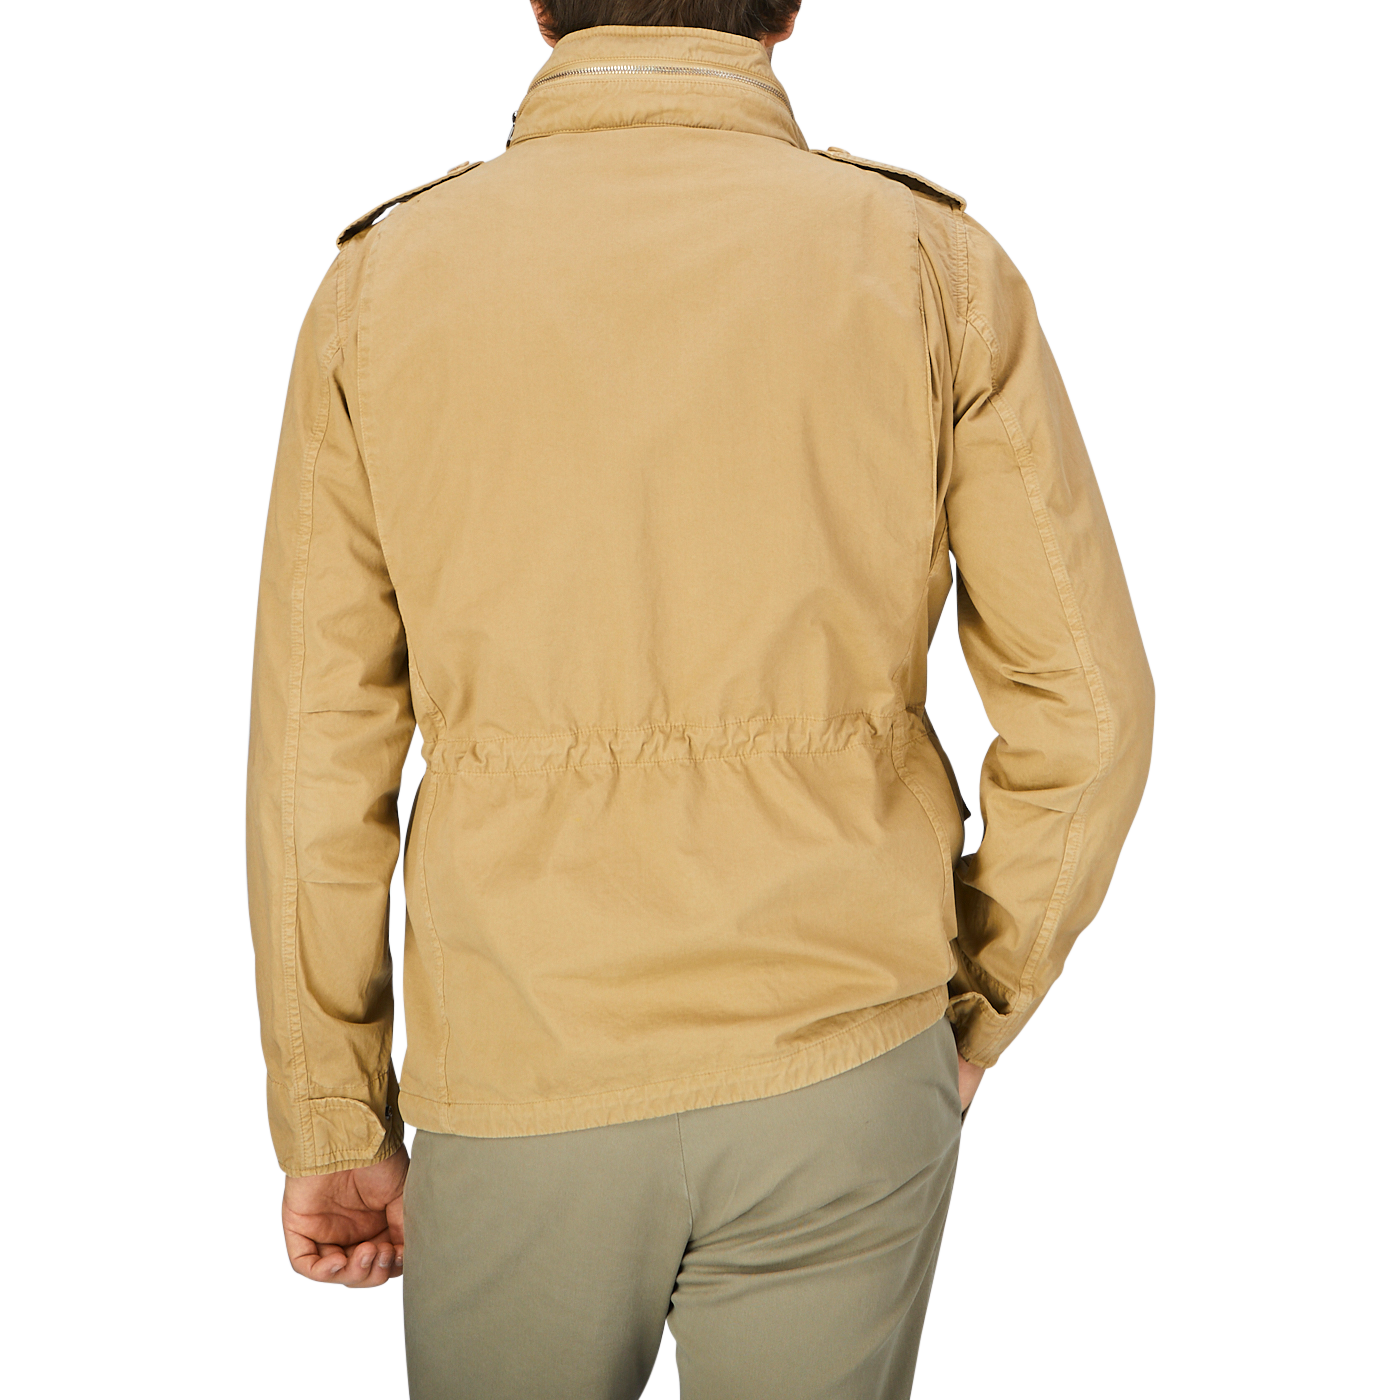 The back view of a man wearing an Aspesi Khaki Beige Cotton Mini Field Jacket, windproof jacket.